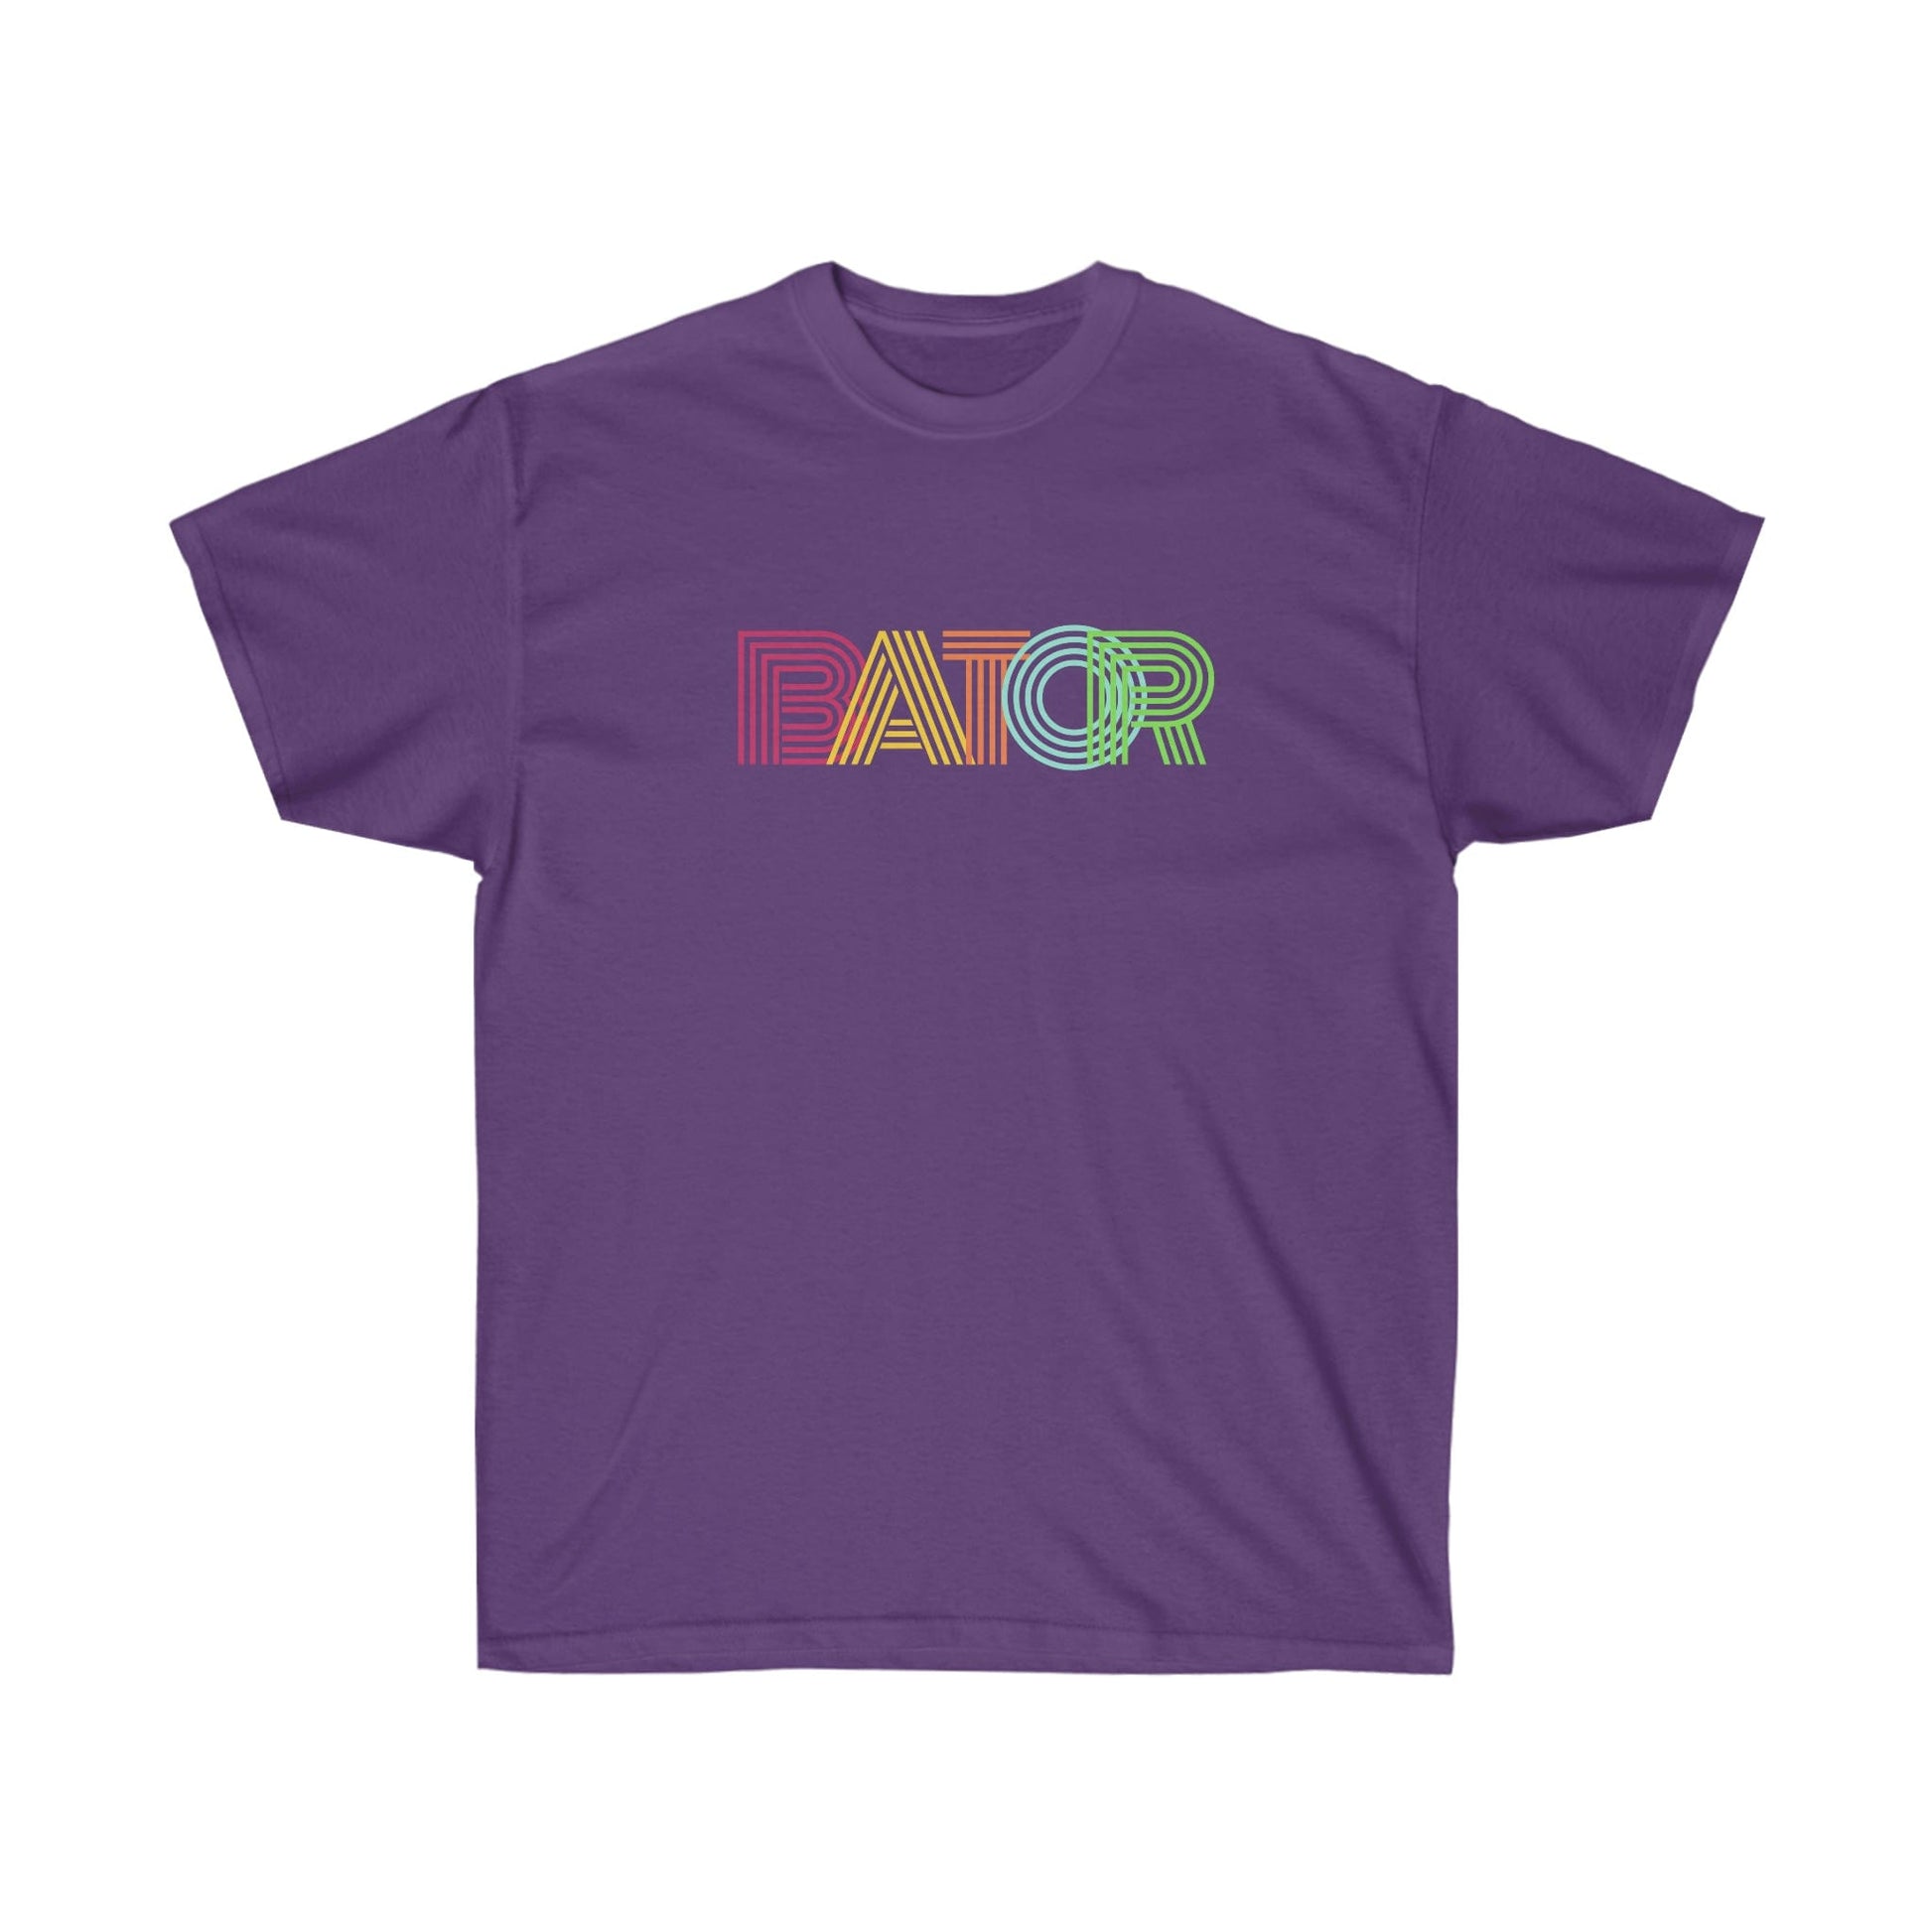 T-Shirt Purple / S Retro Bator LEATHERDADDY BATOR